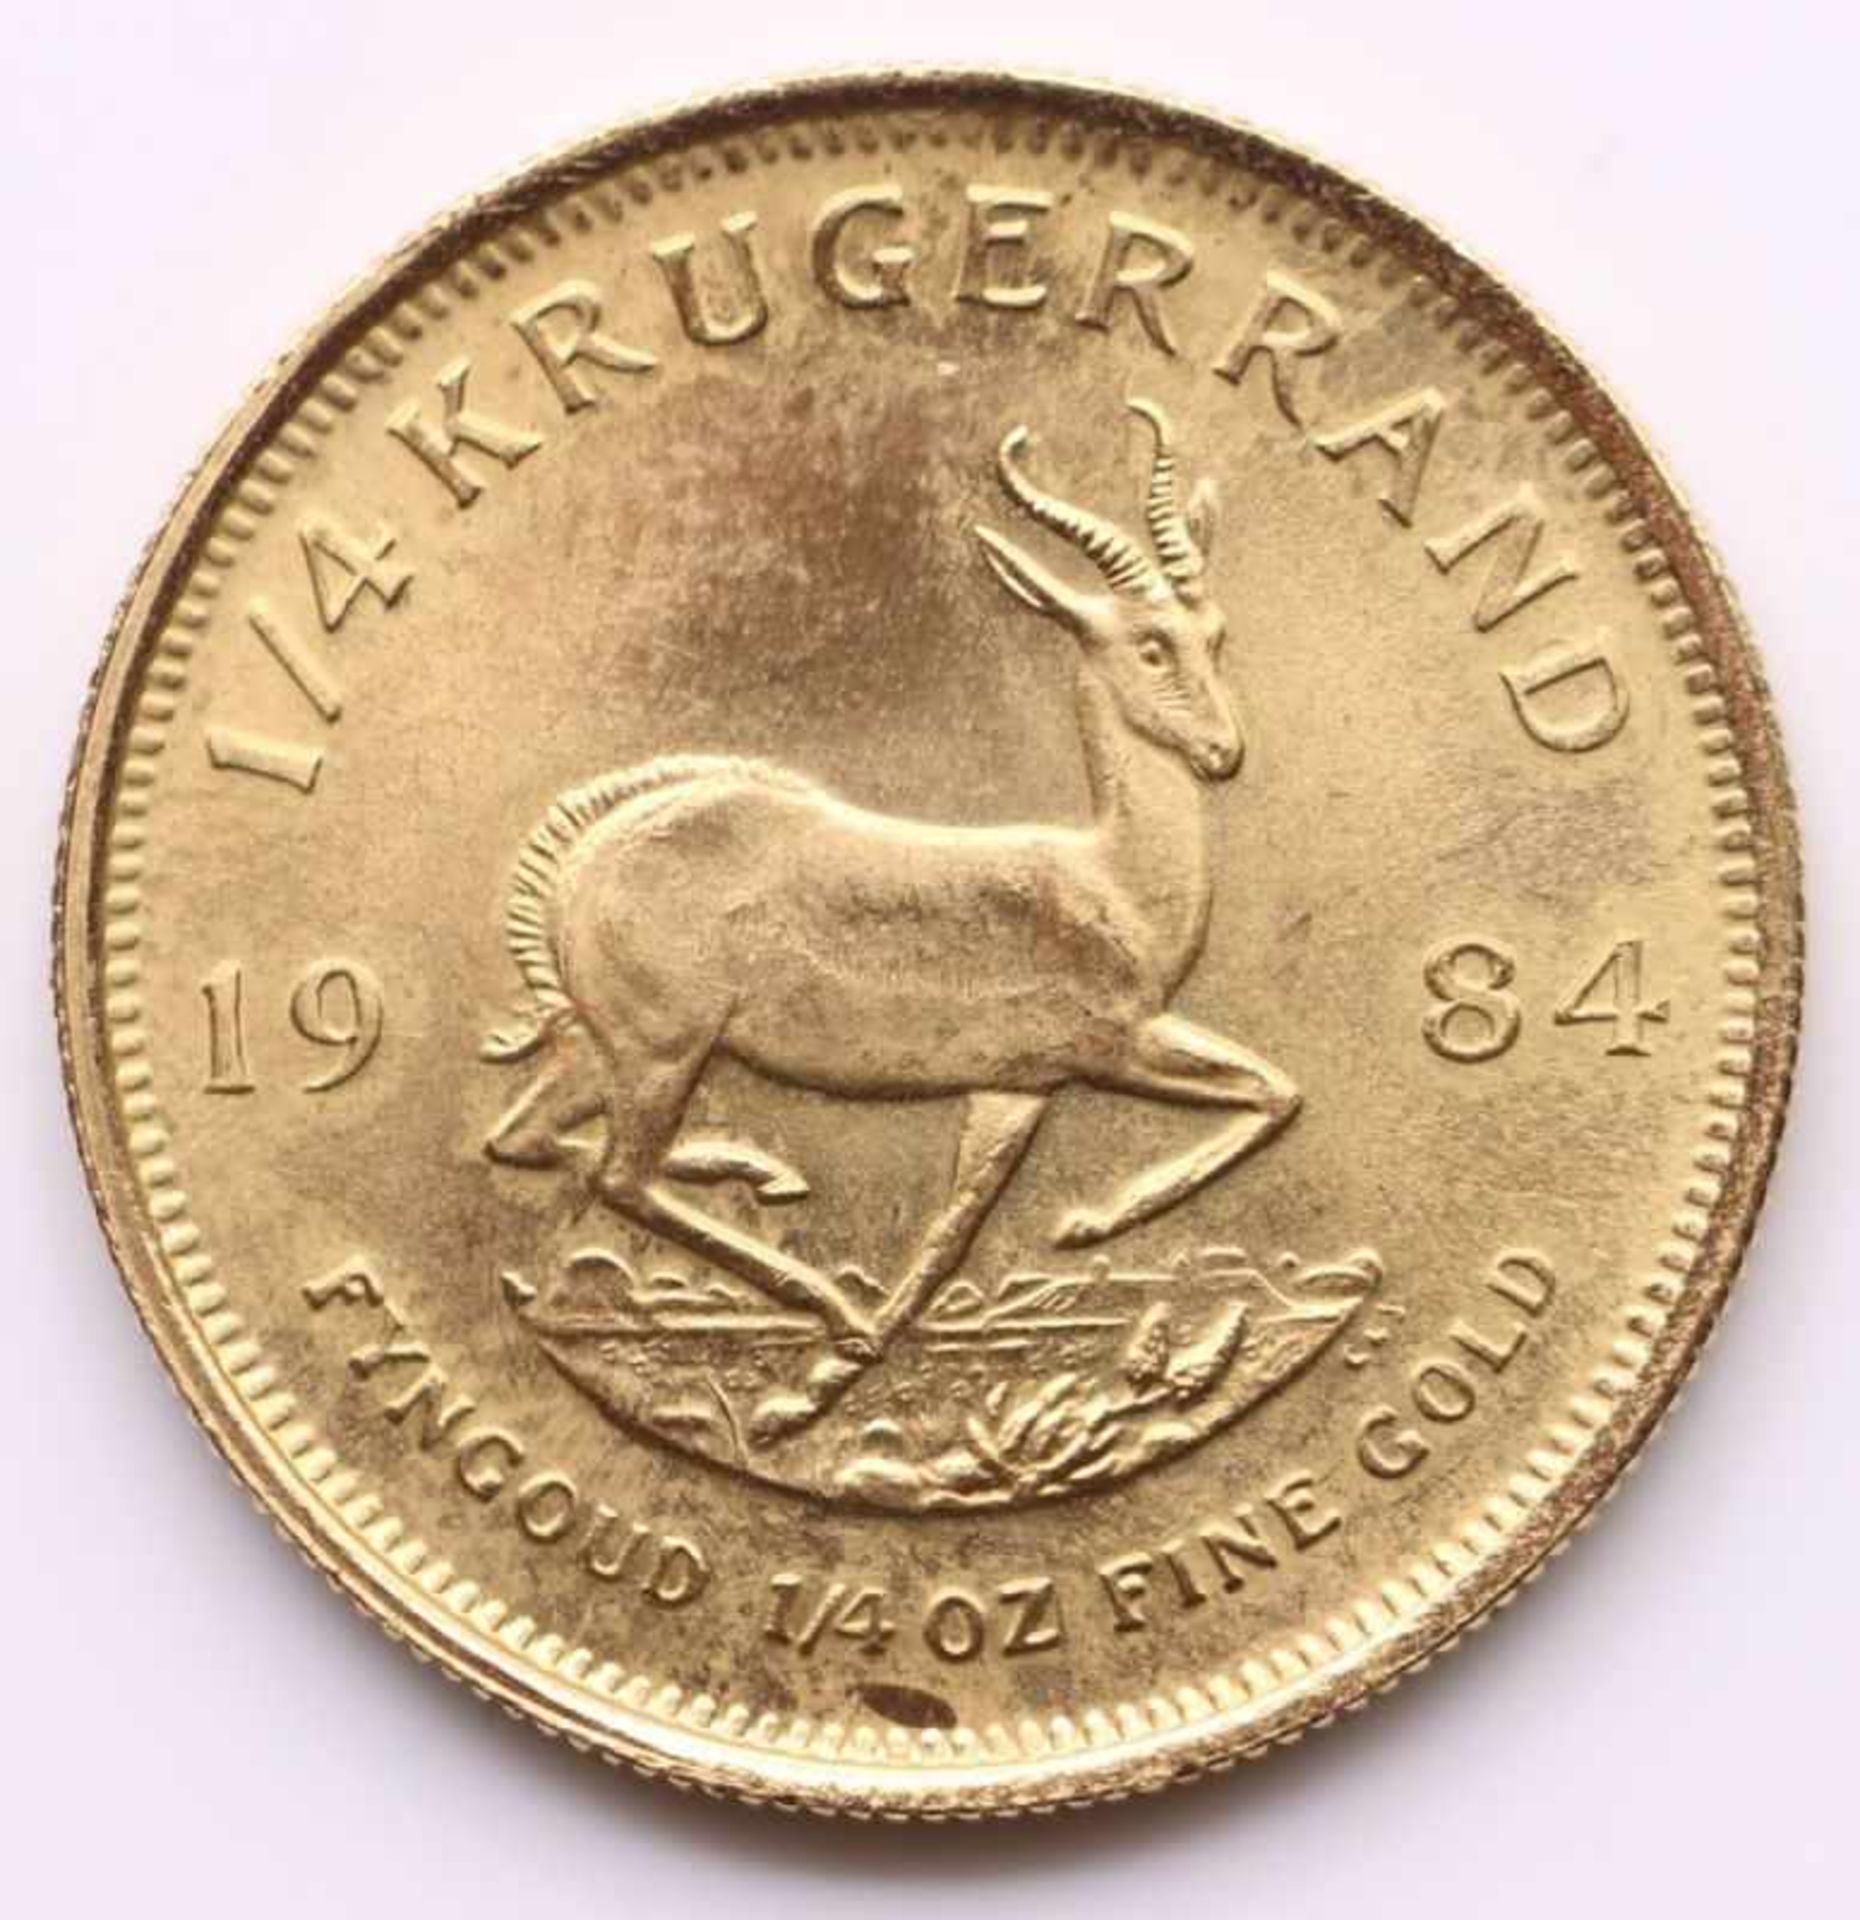 Goldmünze -1/4 Krügerrand - Südafrika 1984, 8,5 Gramm